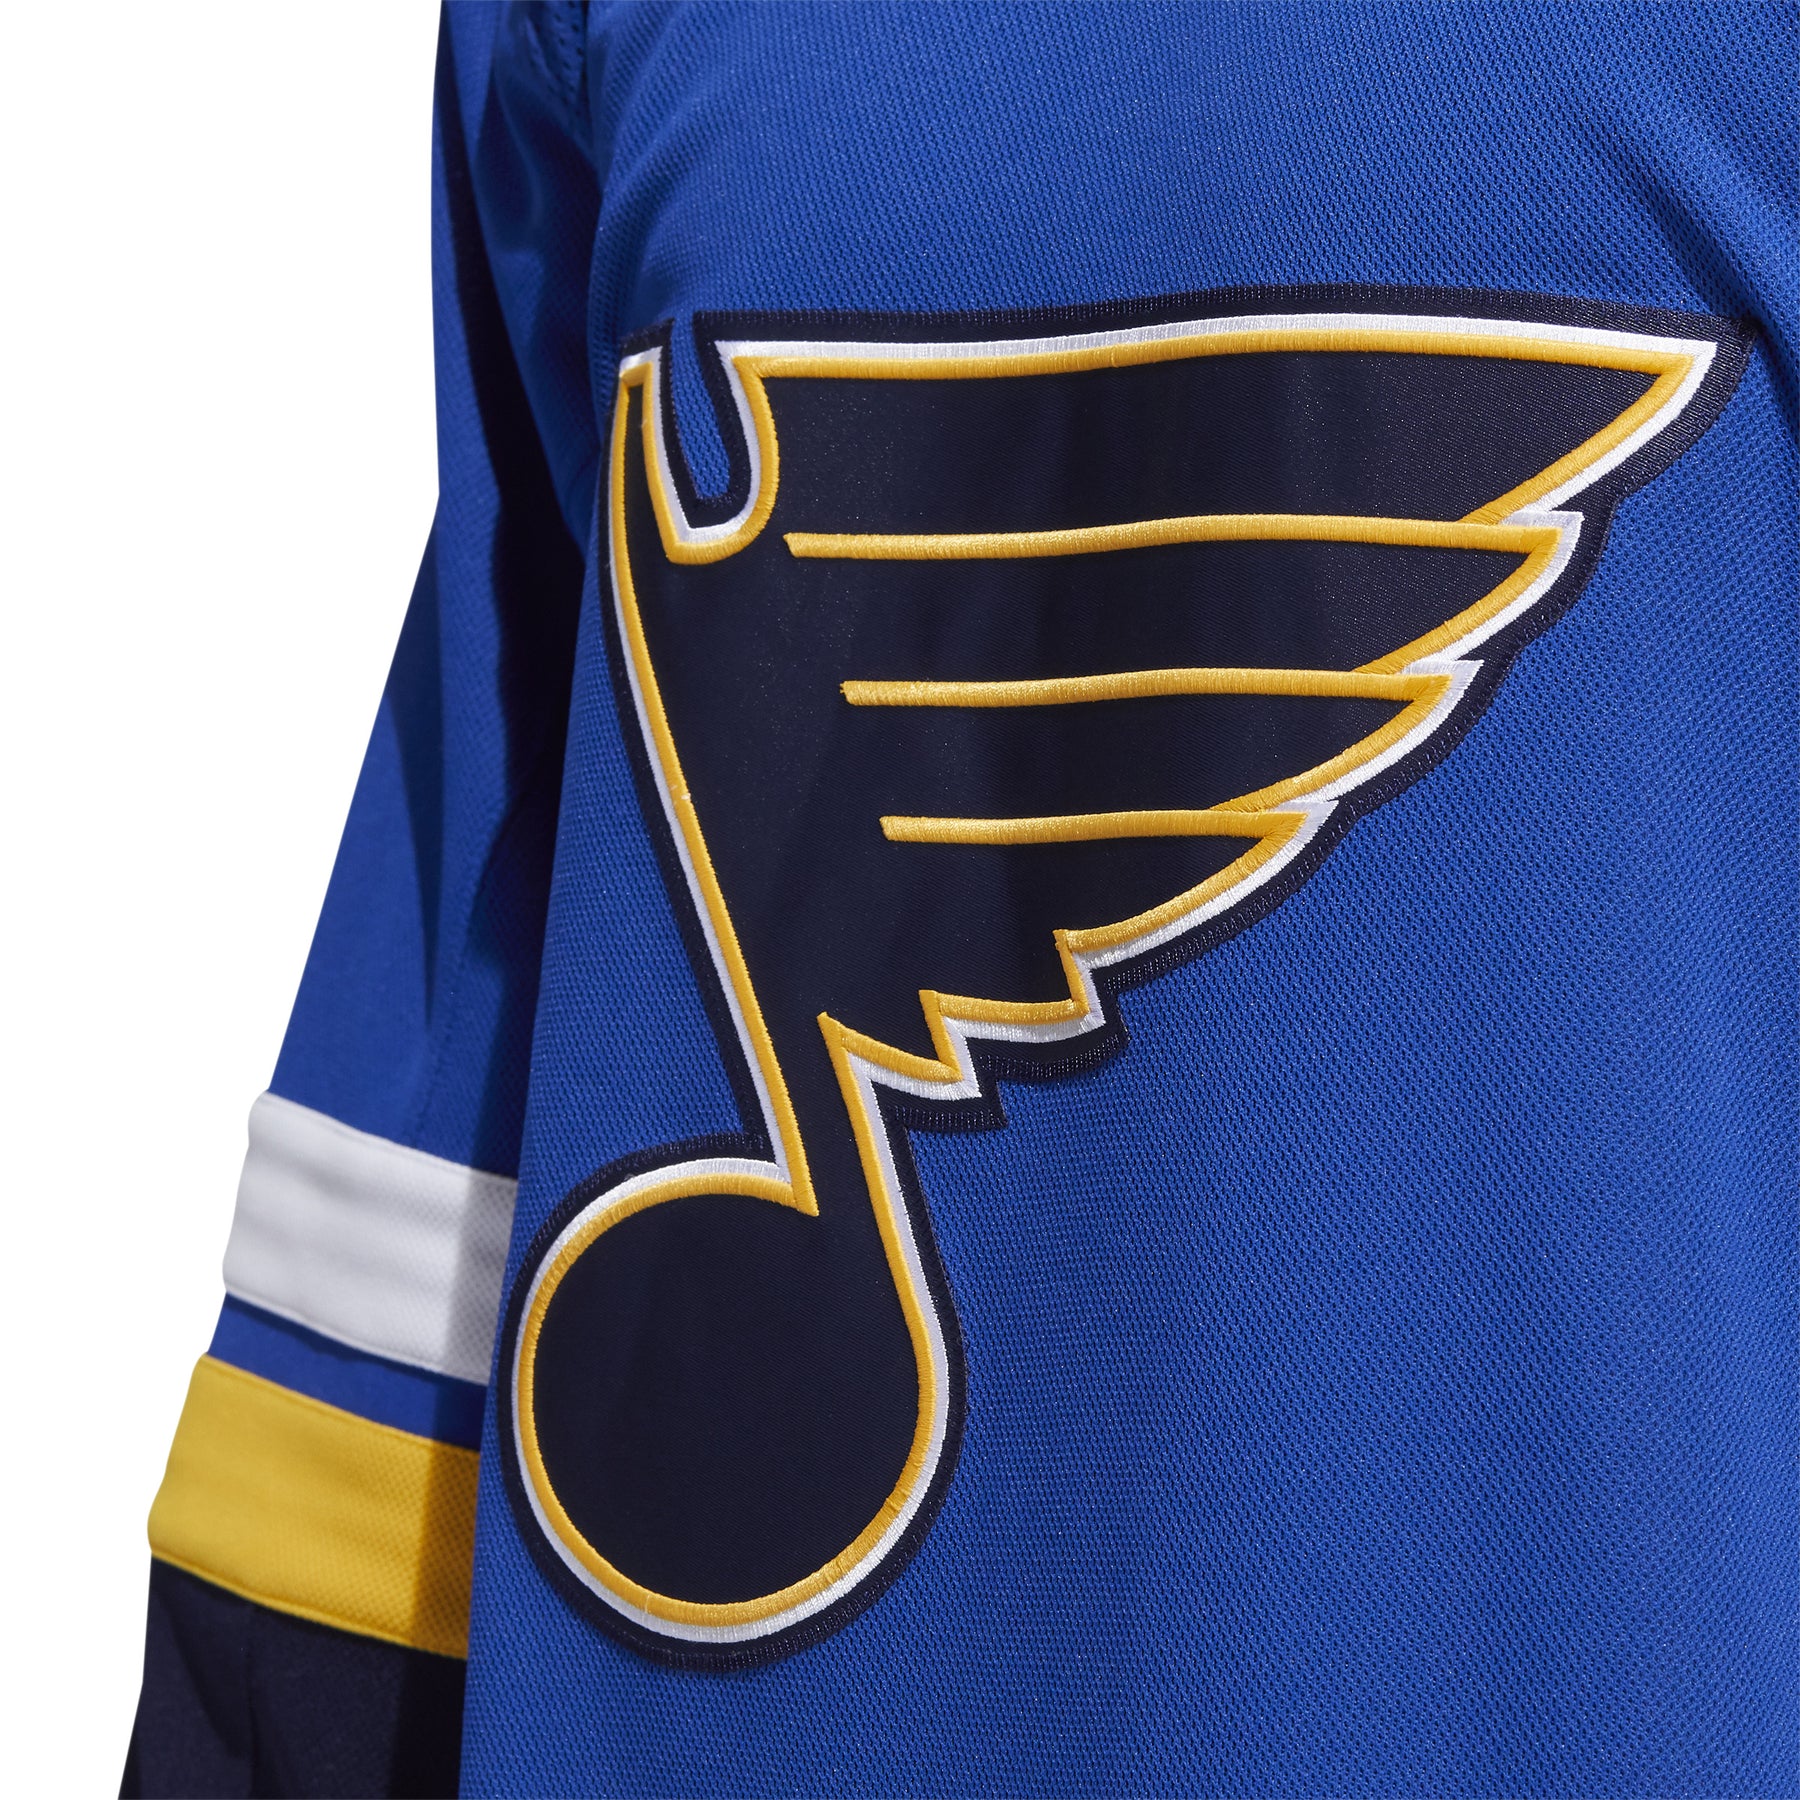 St. Louis Blues adidas Alternate Authentic Blank Jersey - Blue